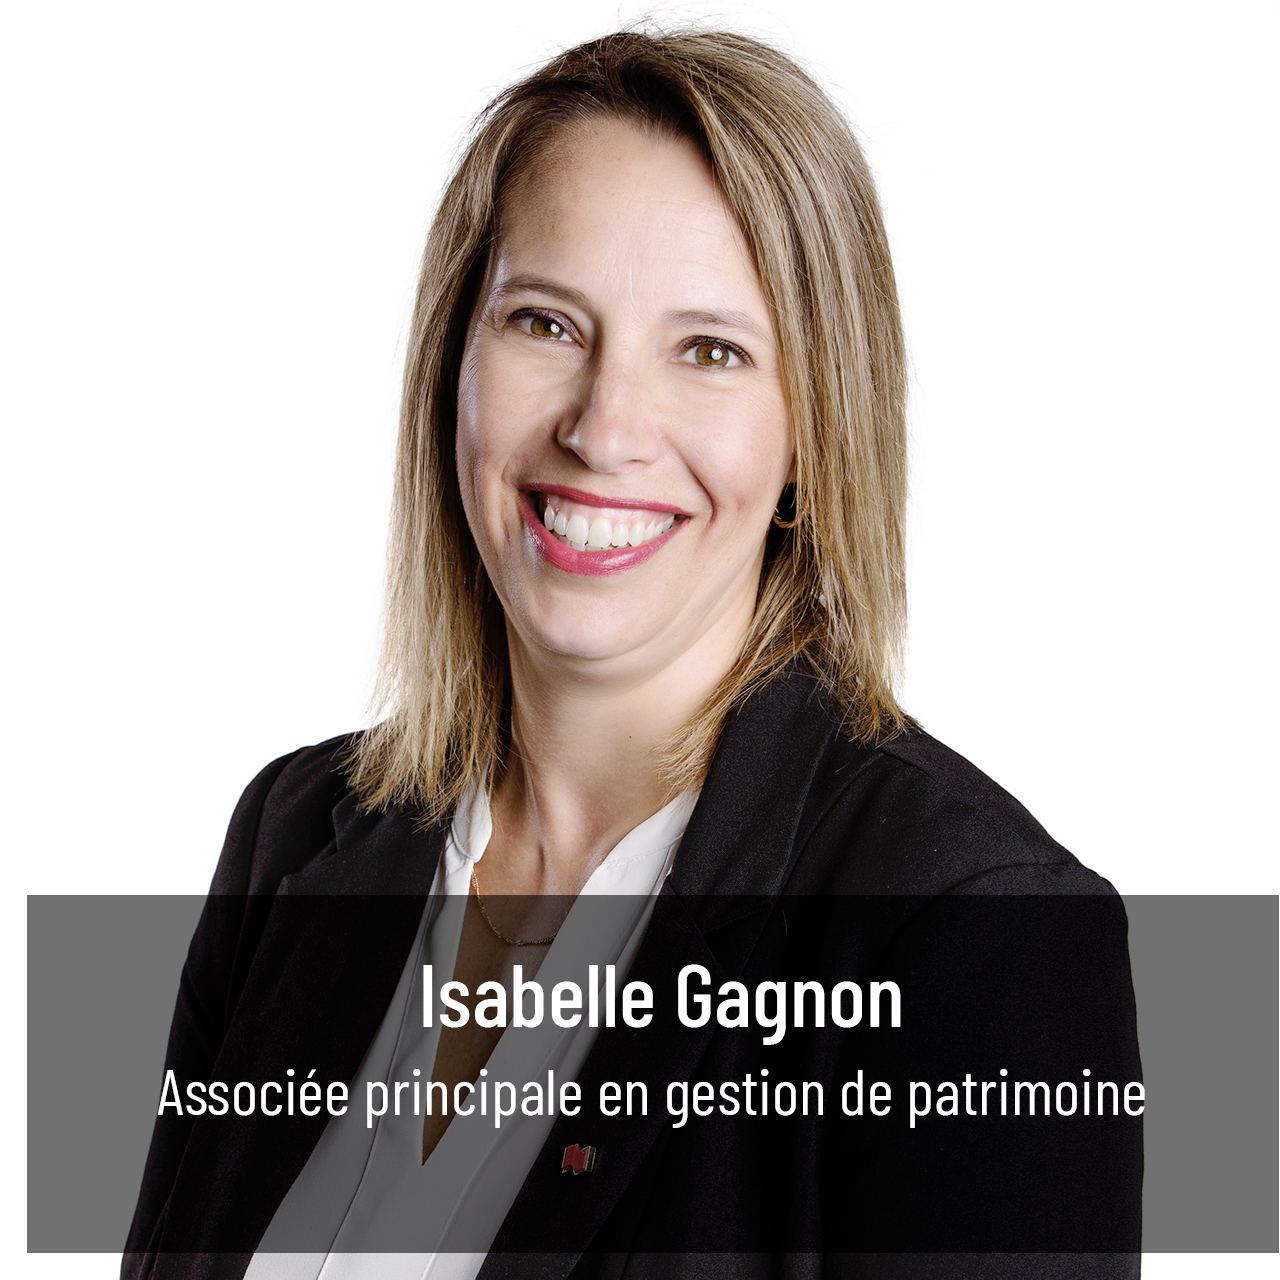 Isabelle Gagnon